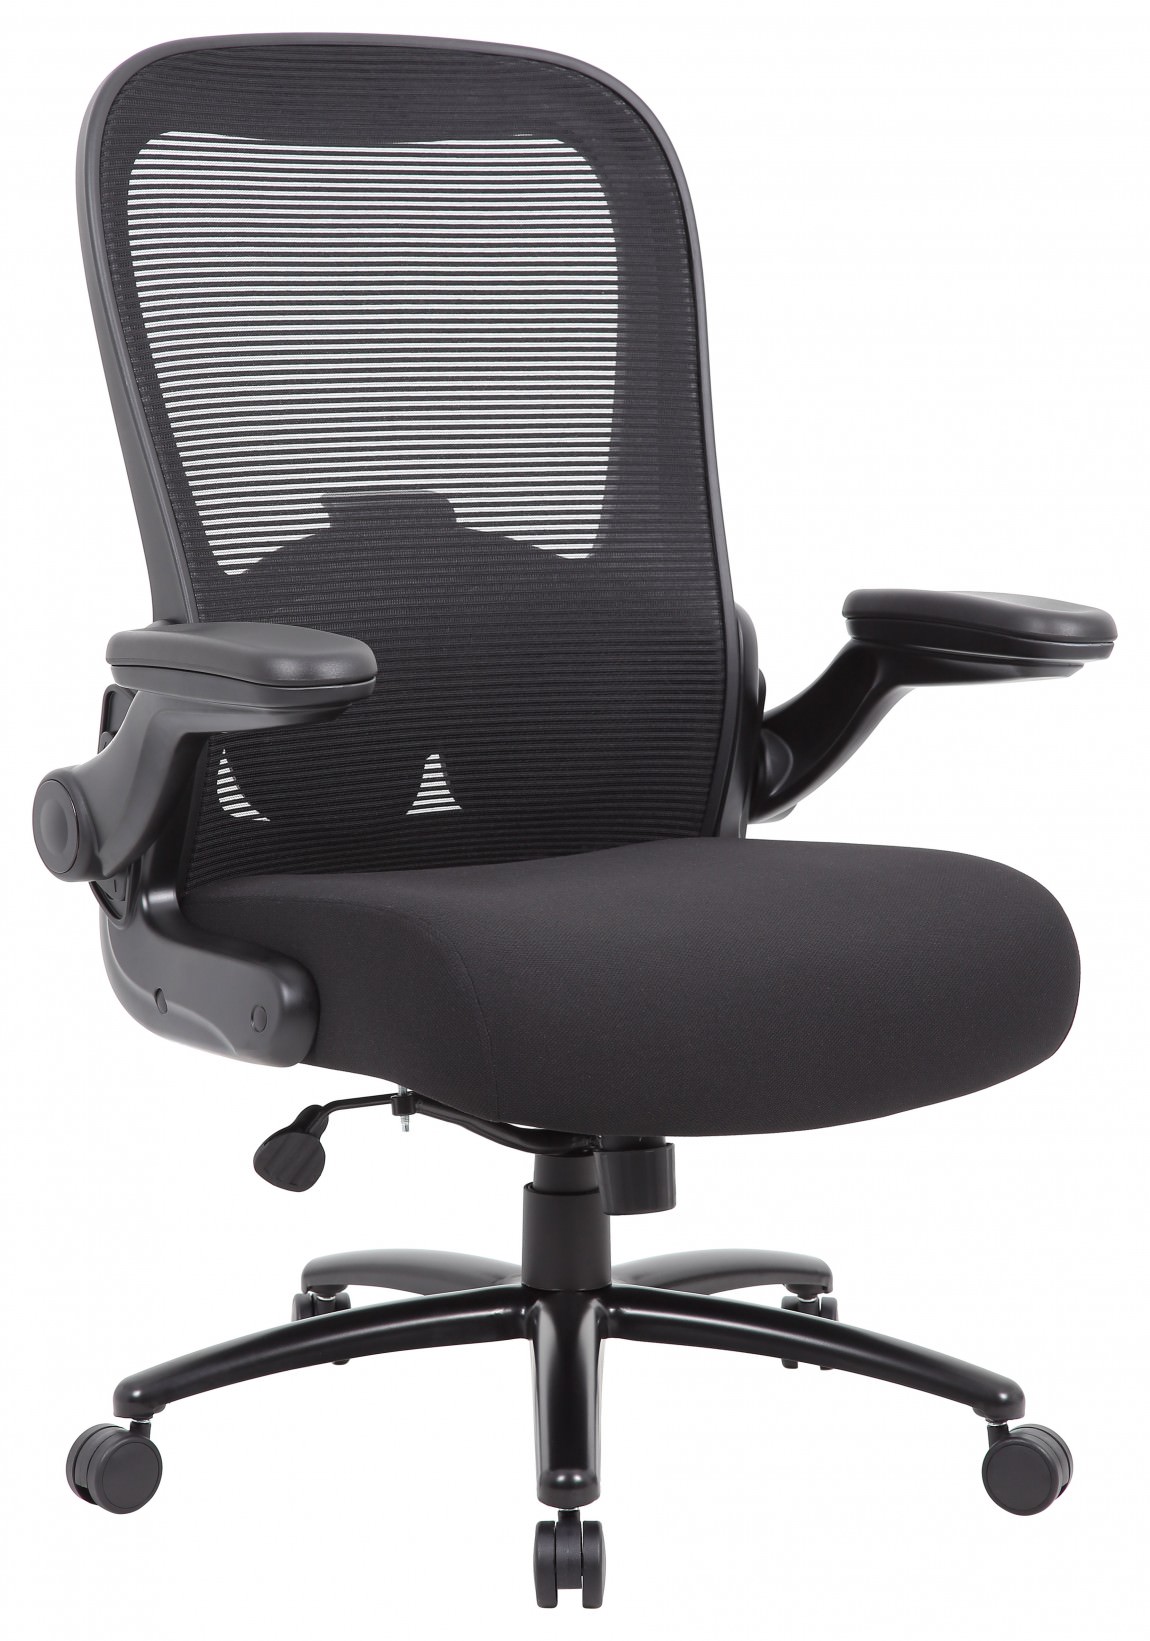 https://madisonliquidators.com/images/p/1150/27213-heavy-duty-office-chair-1.jpg